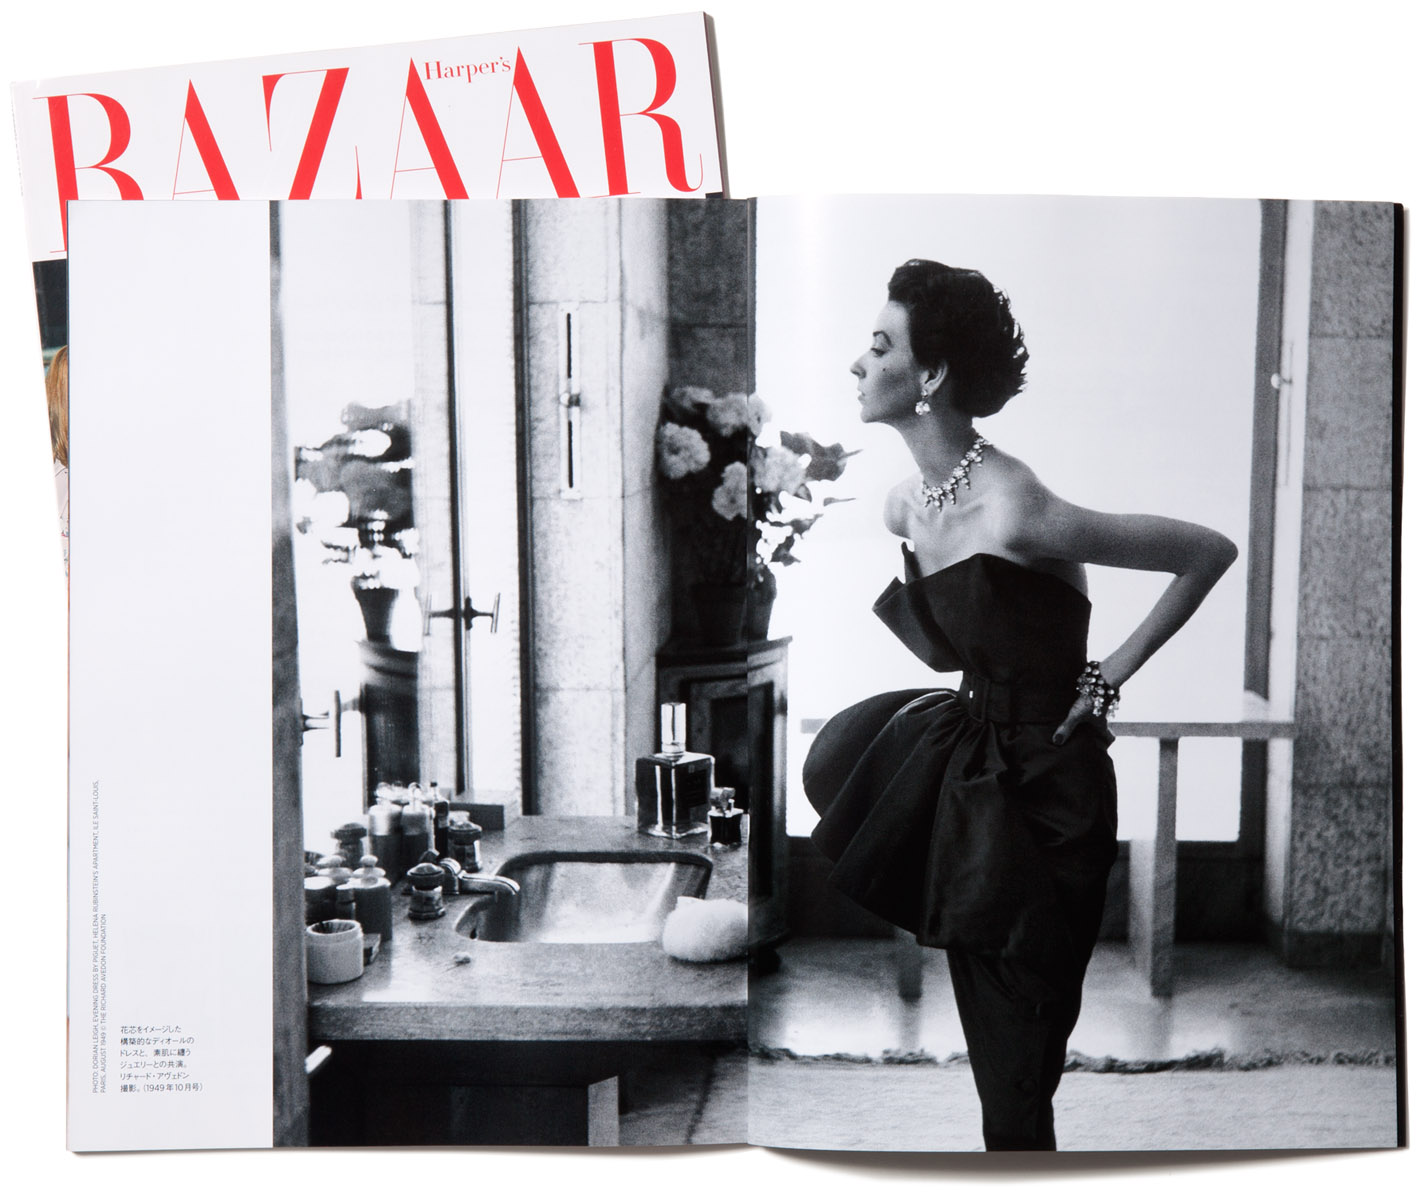 Harper's Bazaar Japan, January 2015, Image by Richard Avedon, 1949